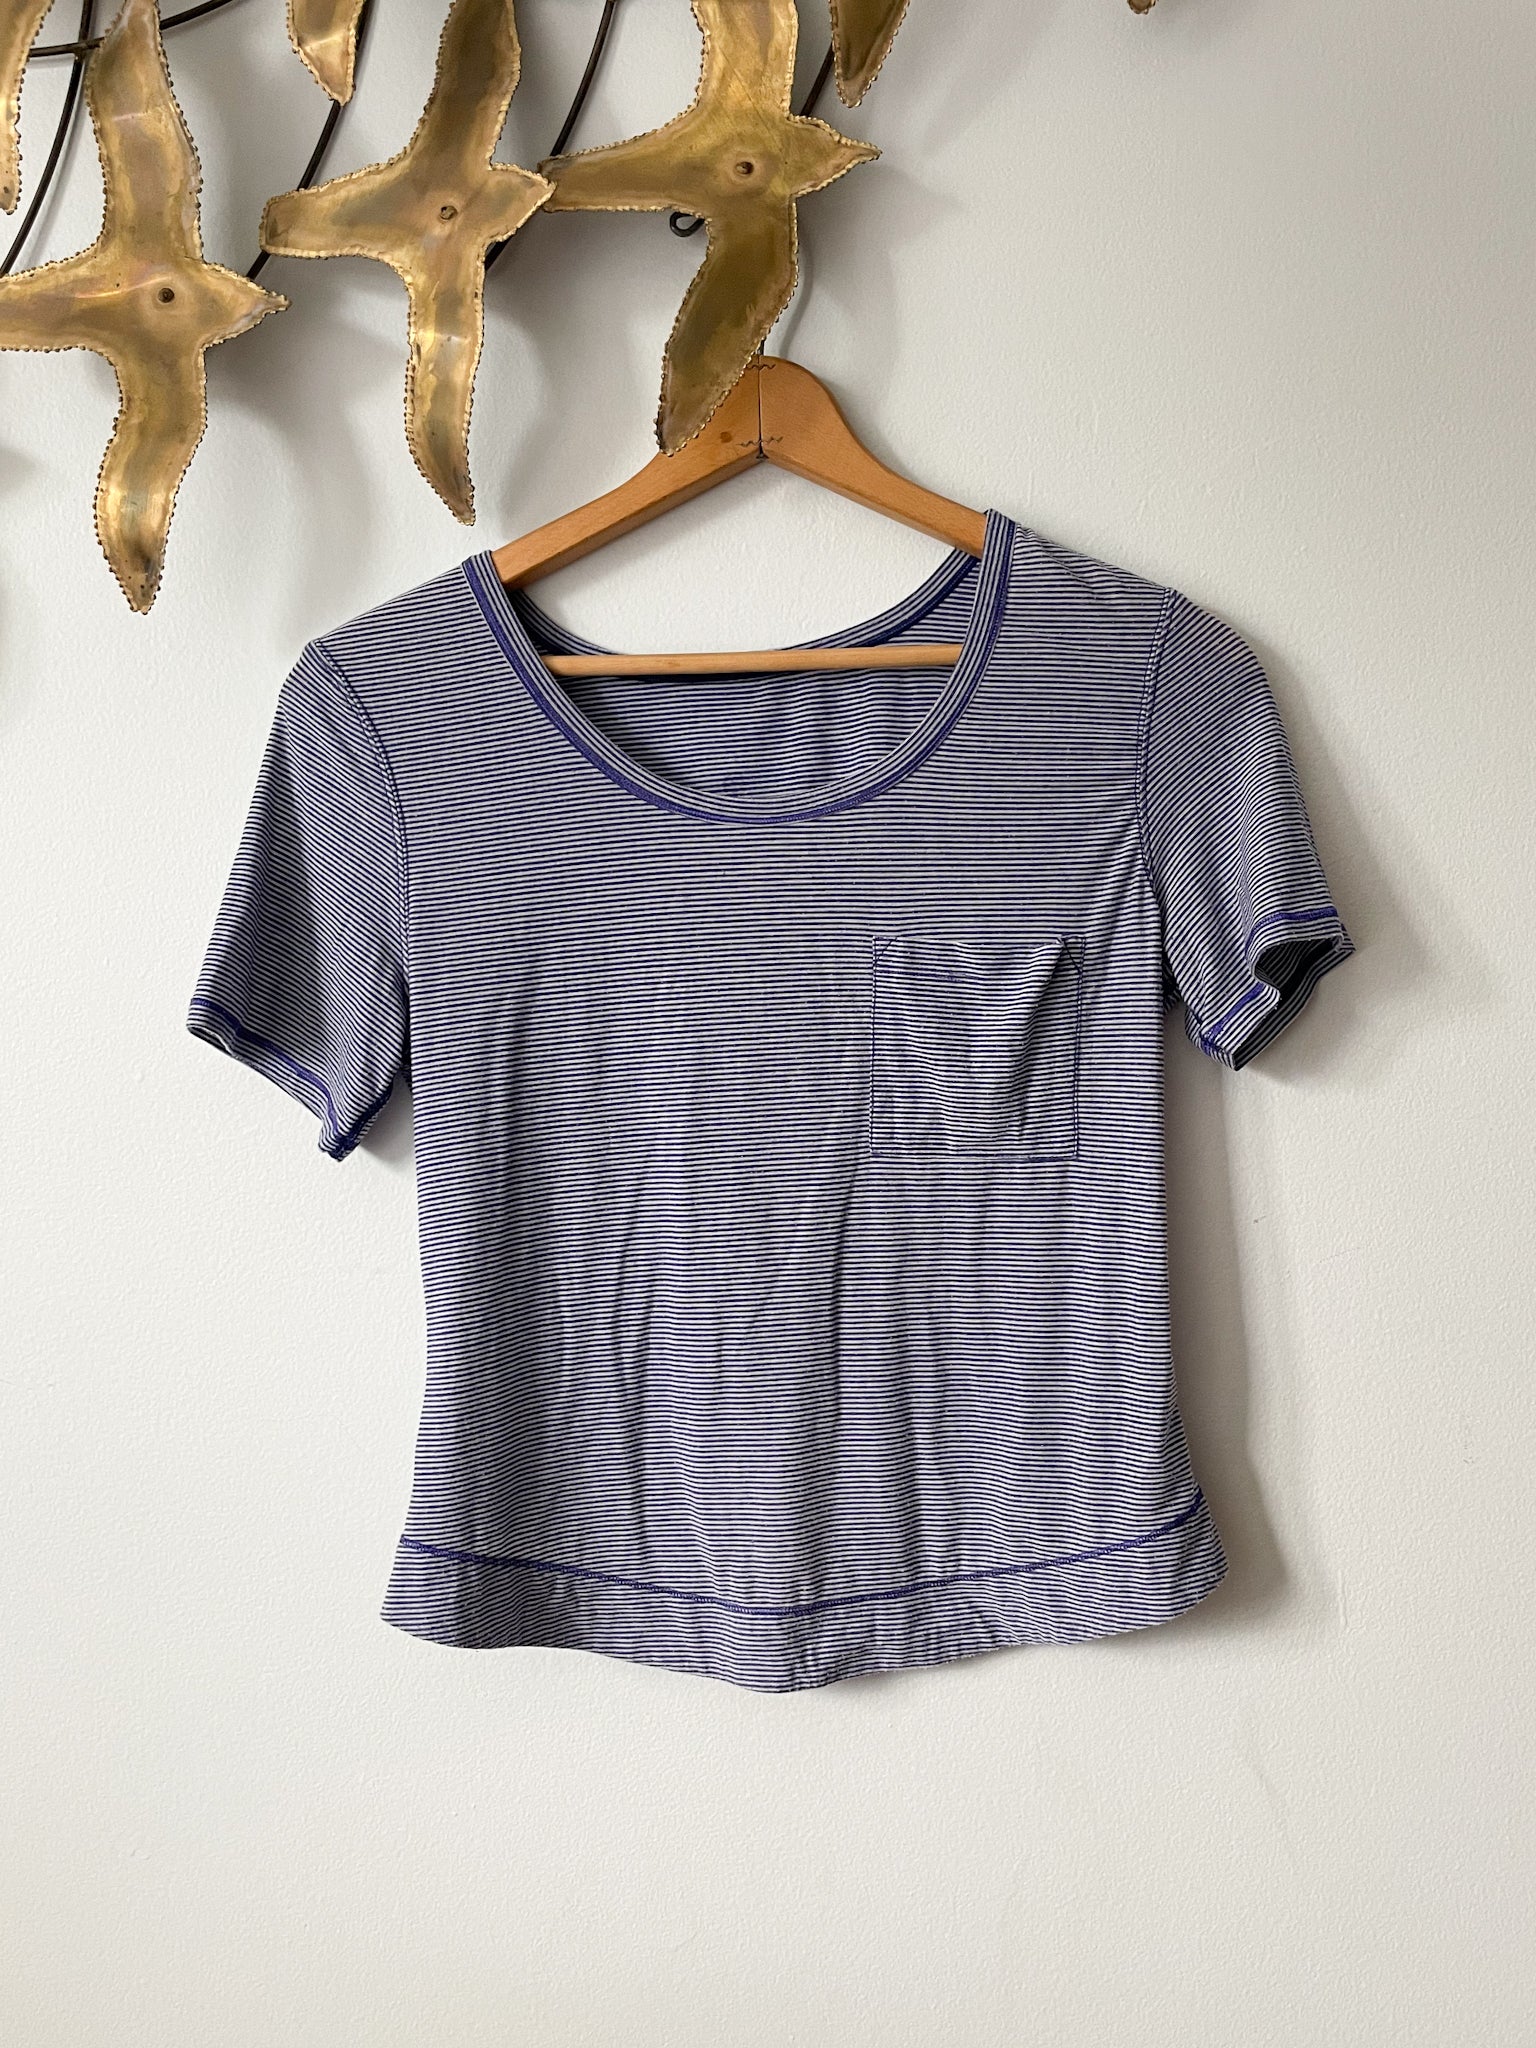 Lululemon Blue Purple Stripe Cropped Back Athletic T-Shirt Top